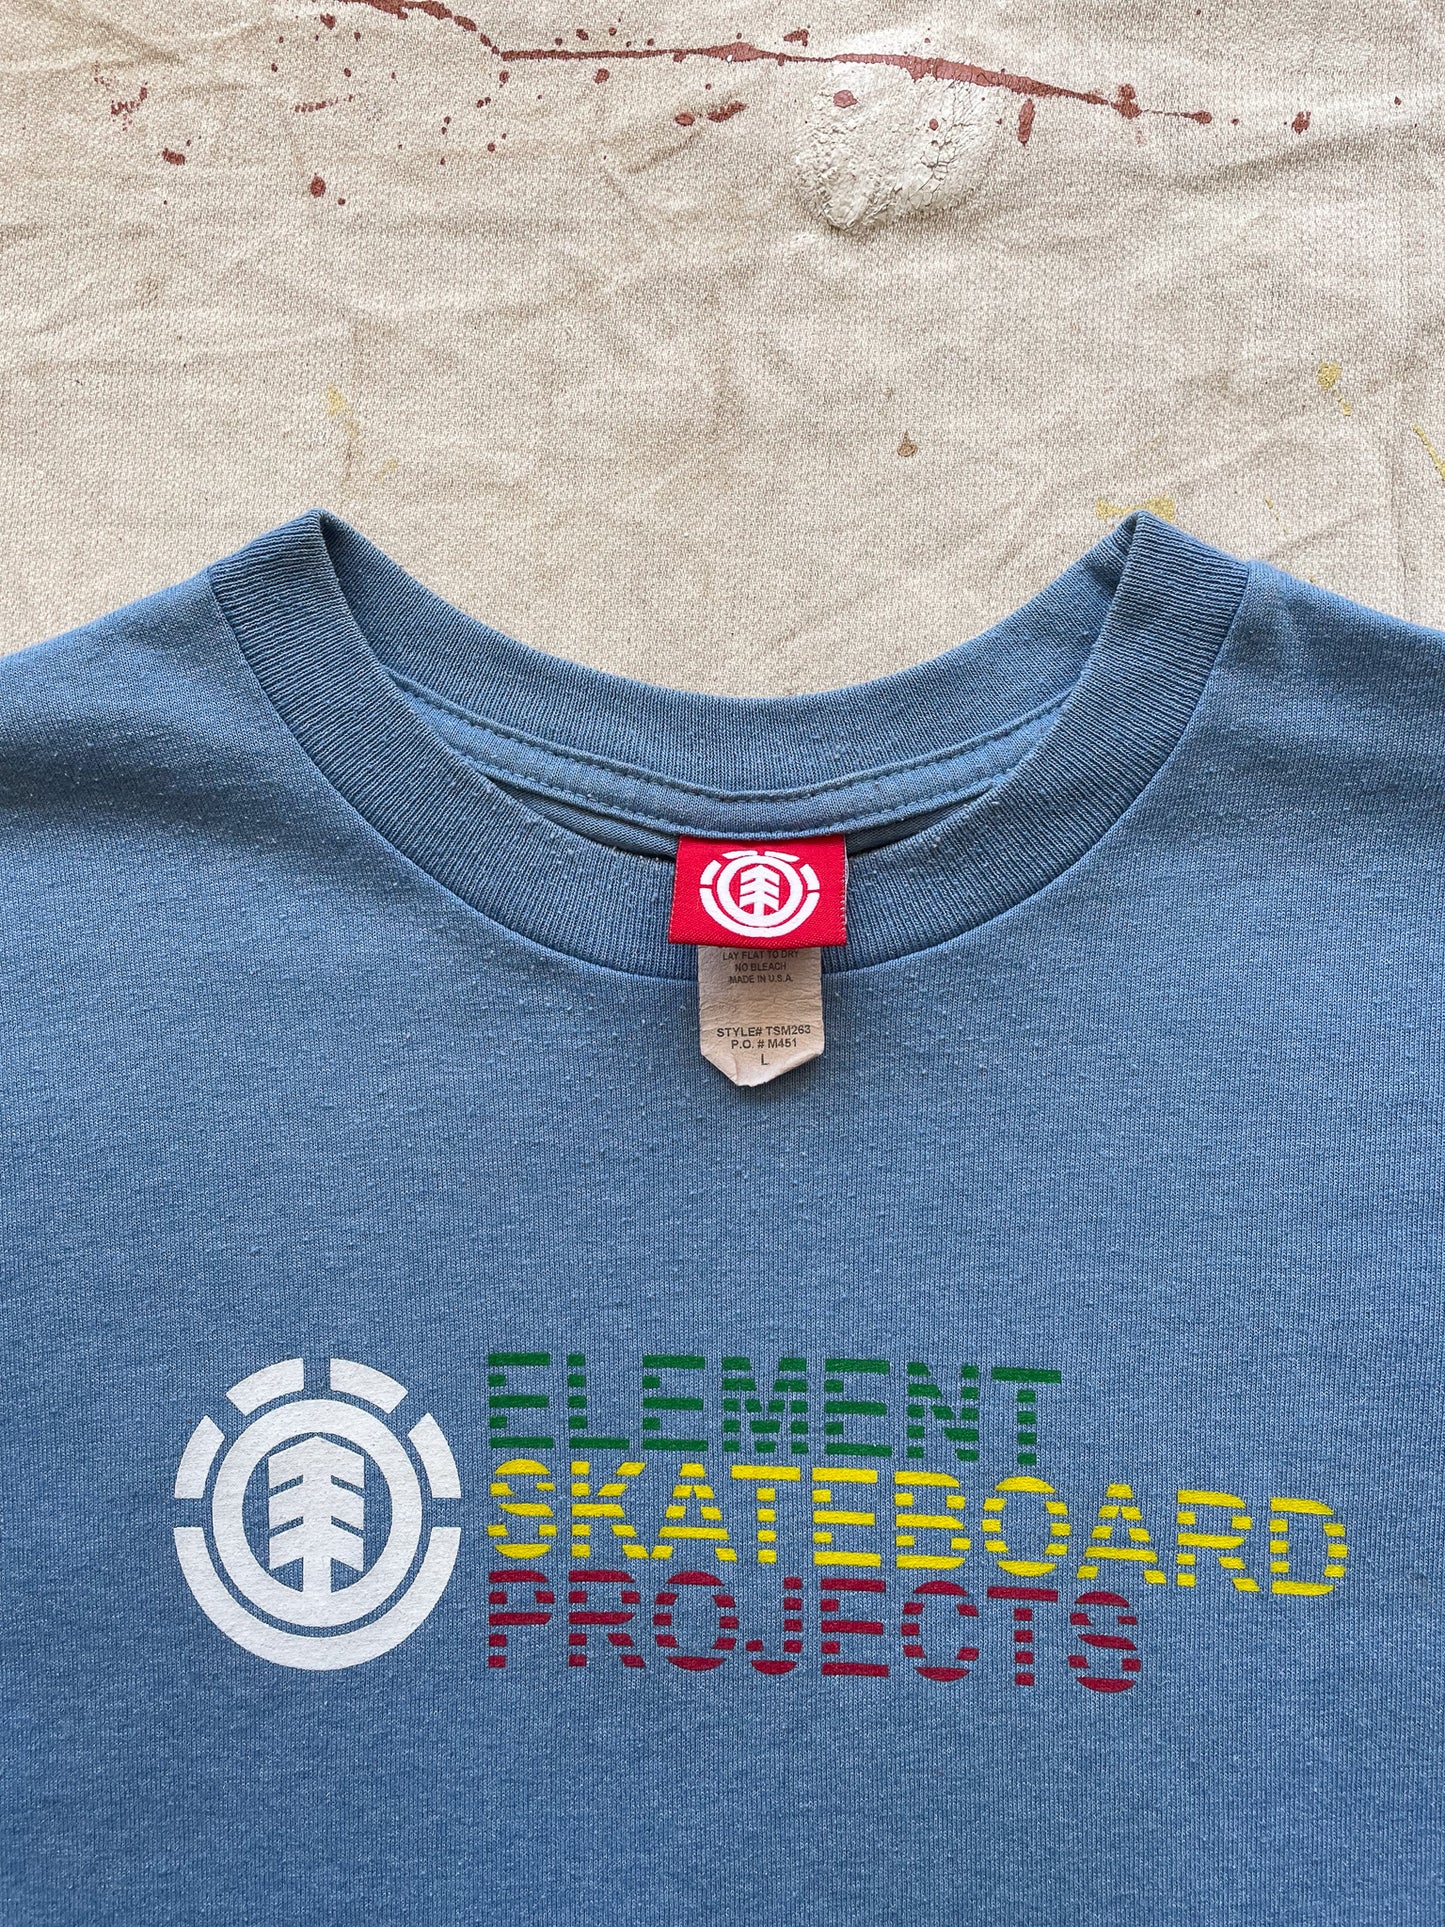 Element Skateboards T-Shirt—[L]